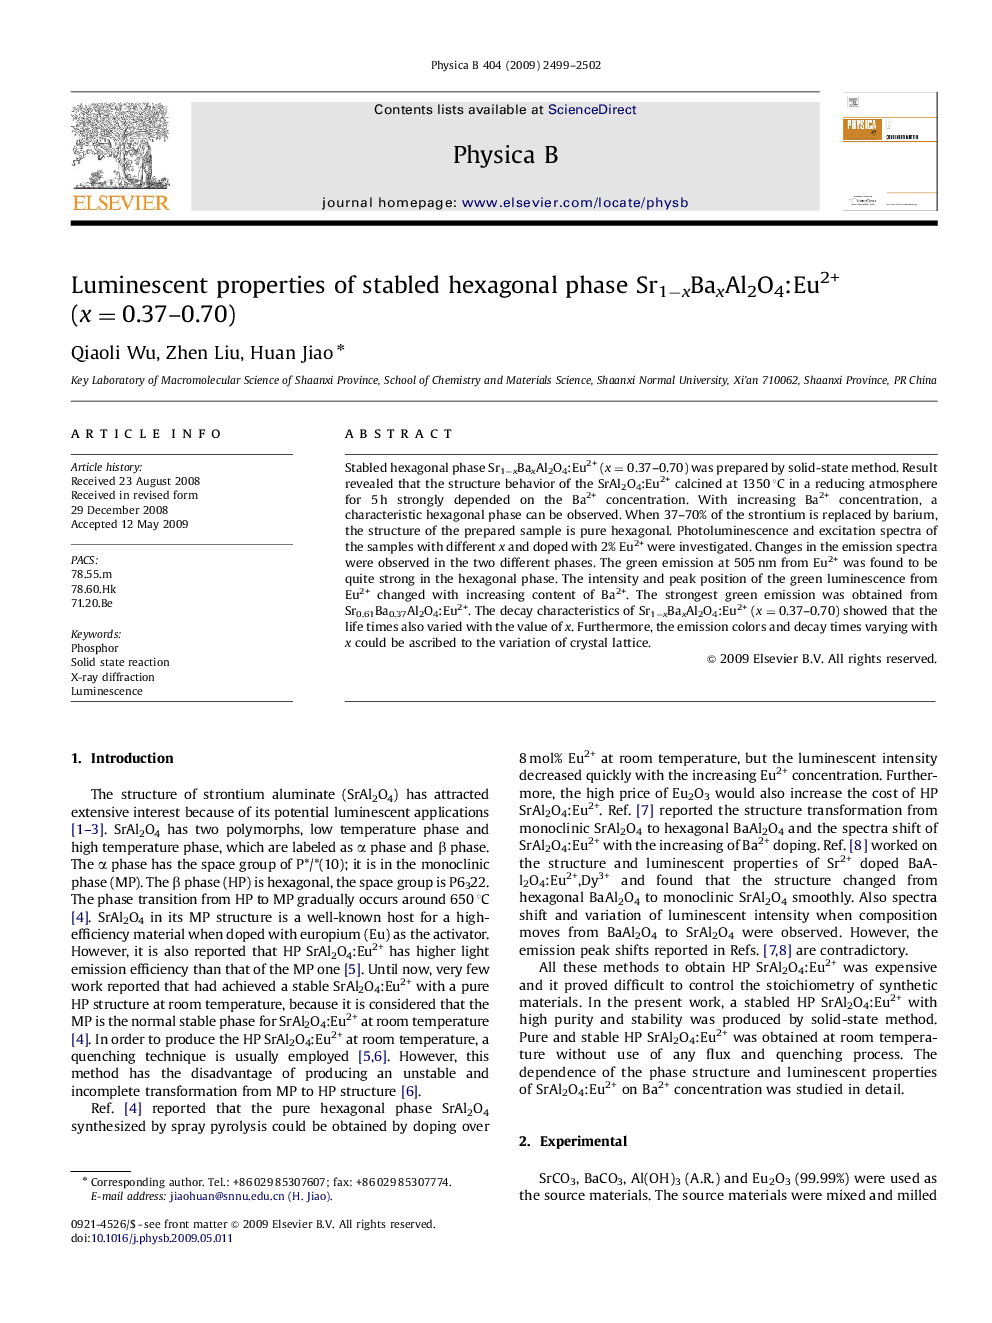 Luminescent properties of stabled hexagonal phase Sr1−xBaxAl2O4:Eu2+ (x=0.37–0.70)